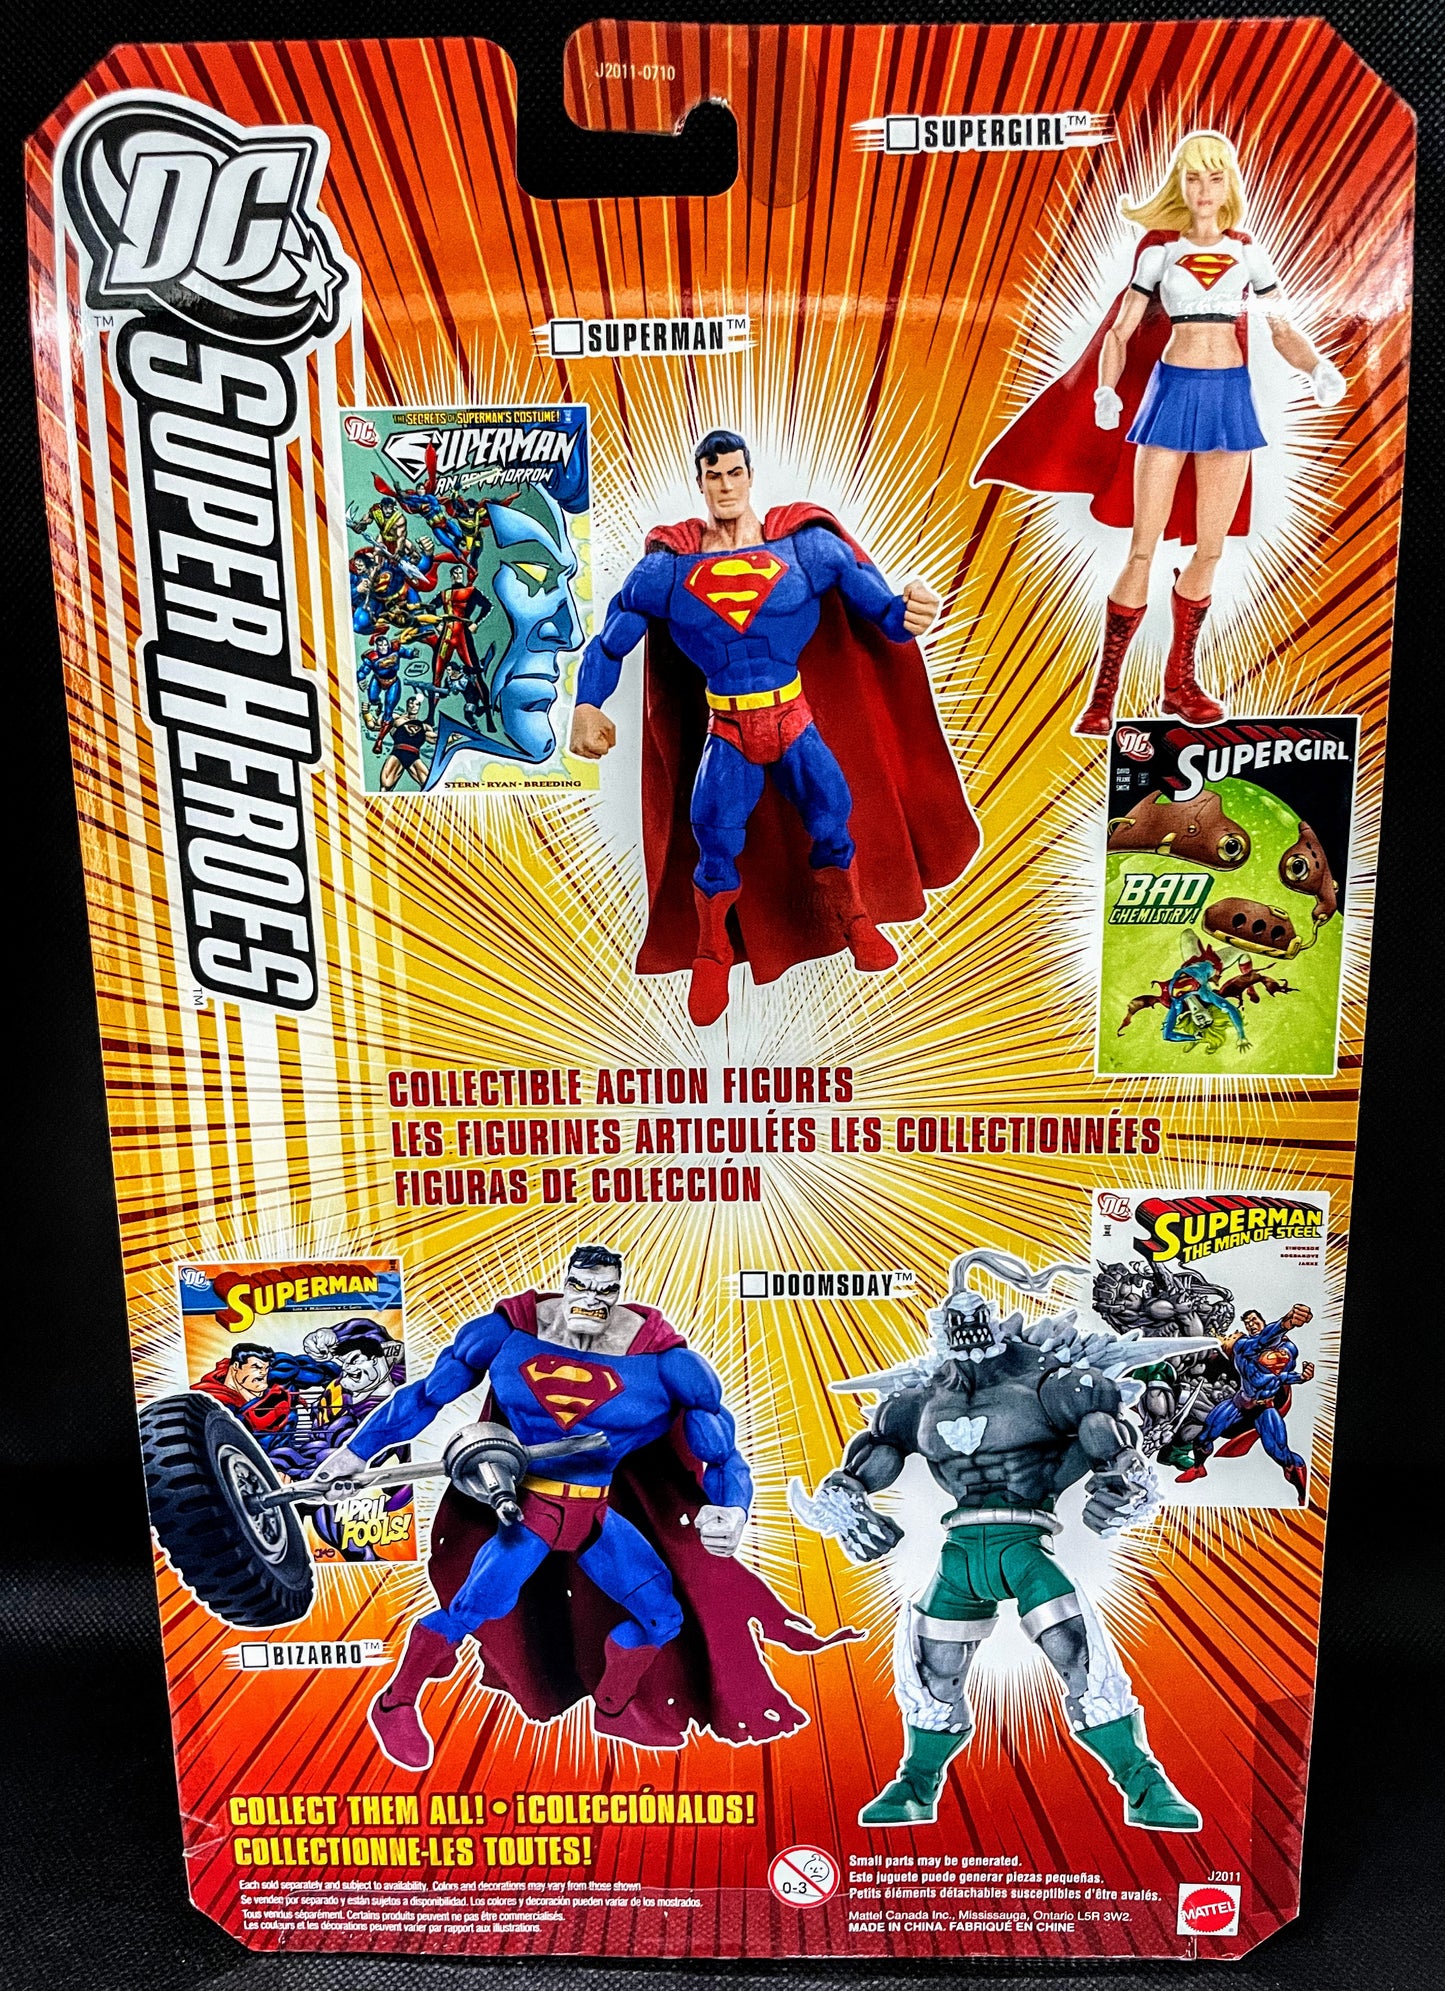 DC SuperHeroes Supergirl